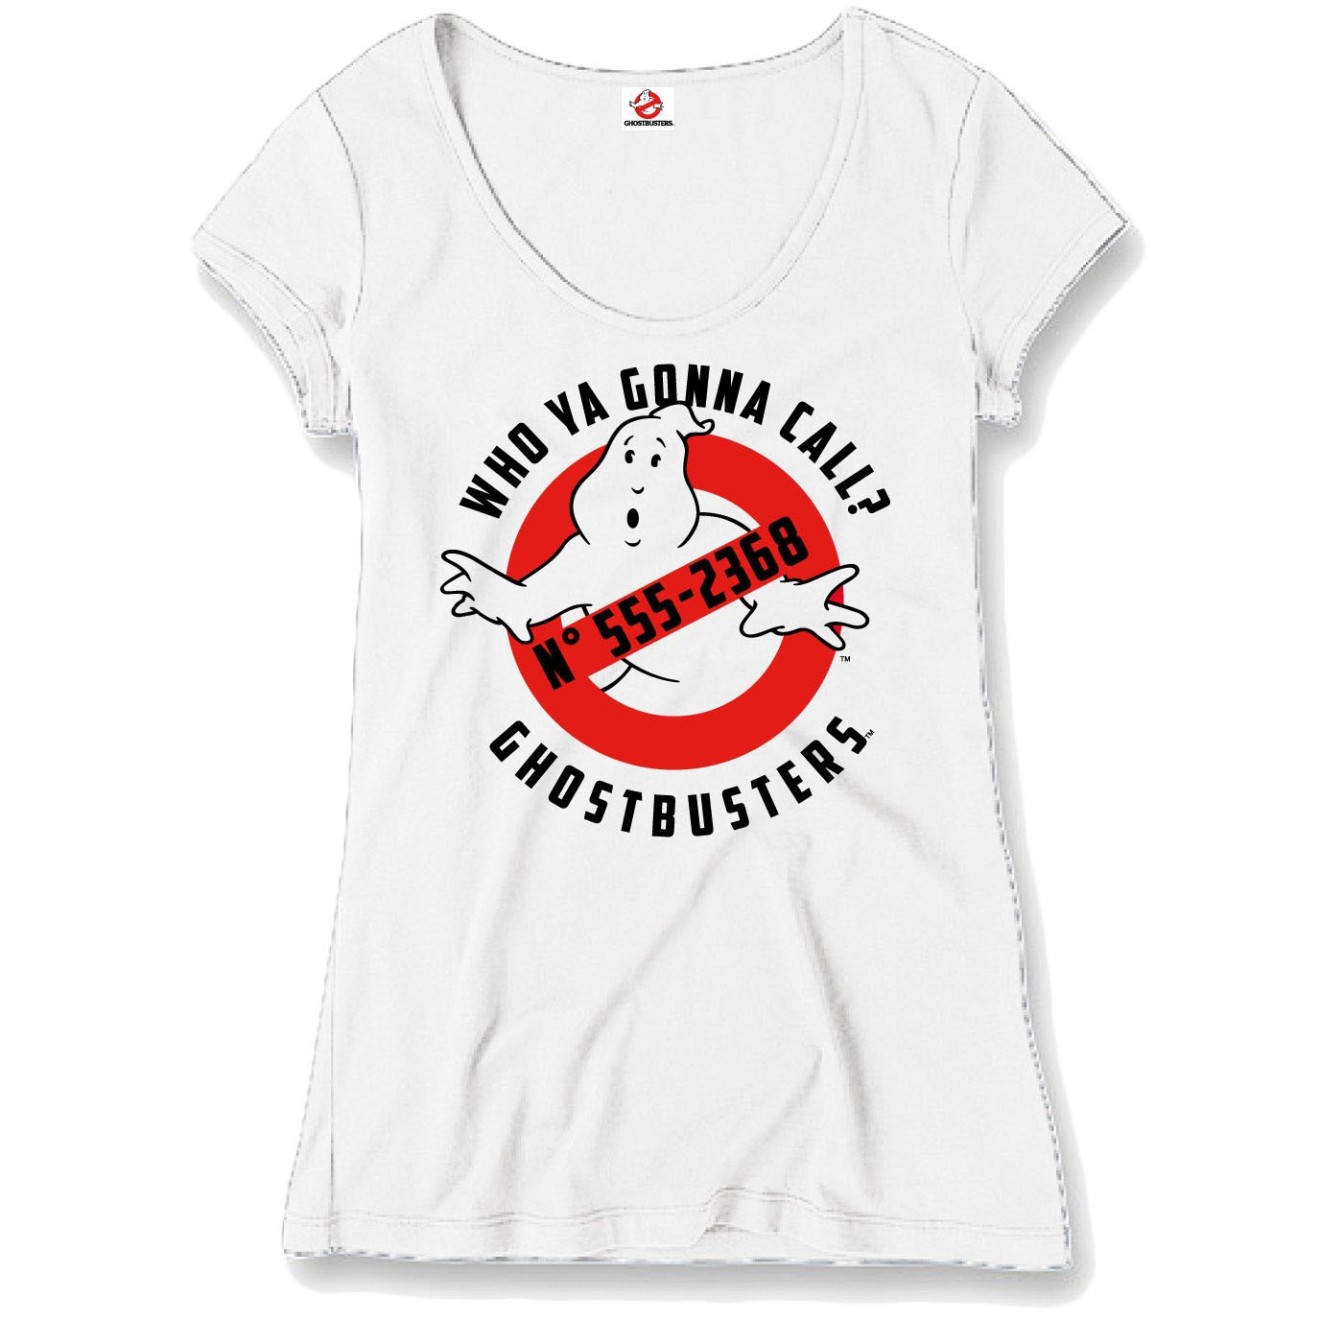 Ghostbusters Frauen T-Shirt Top tee